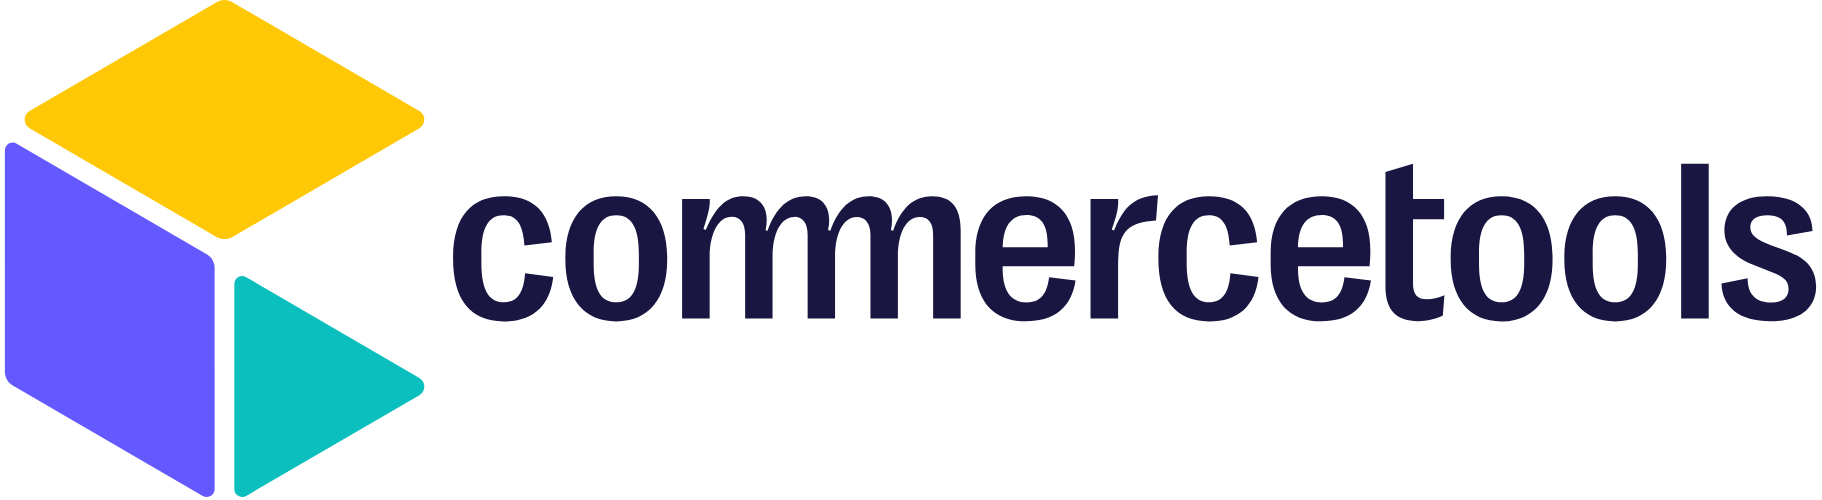 Commercetools Community Logo